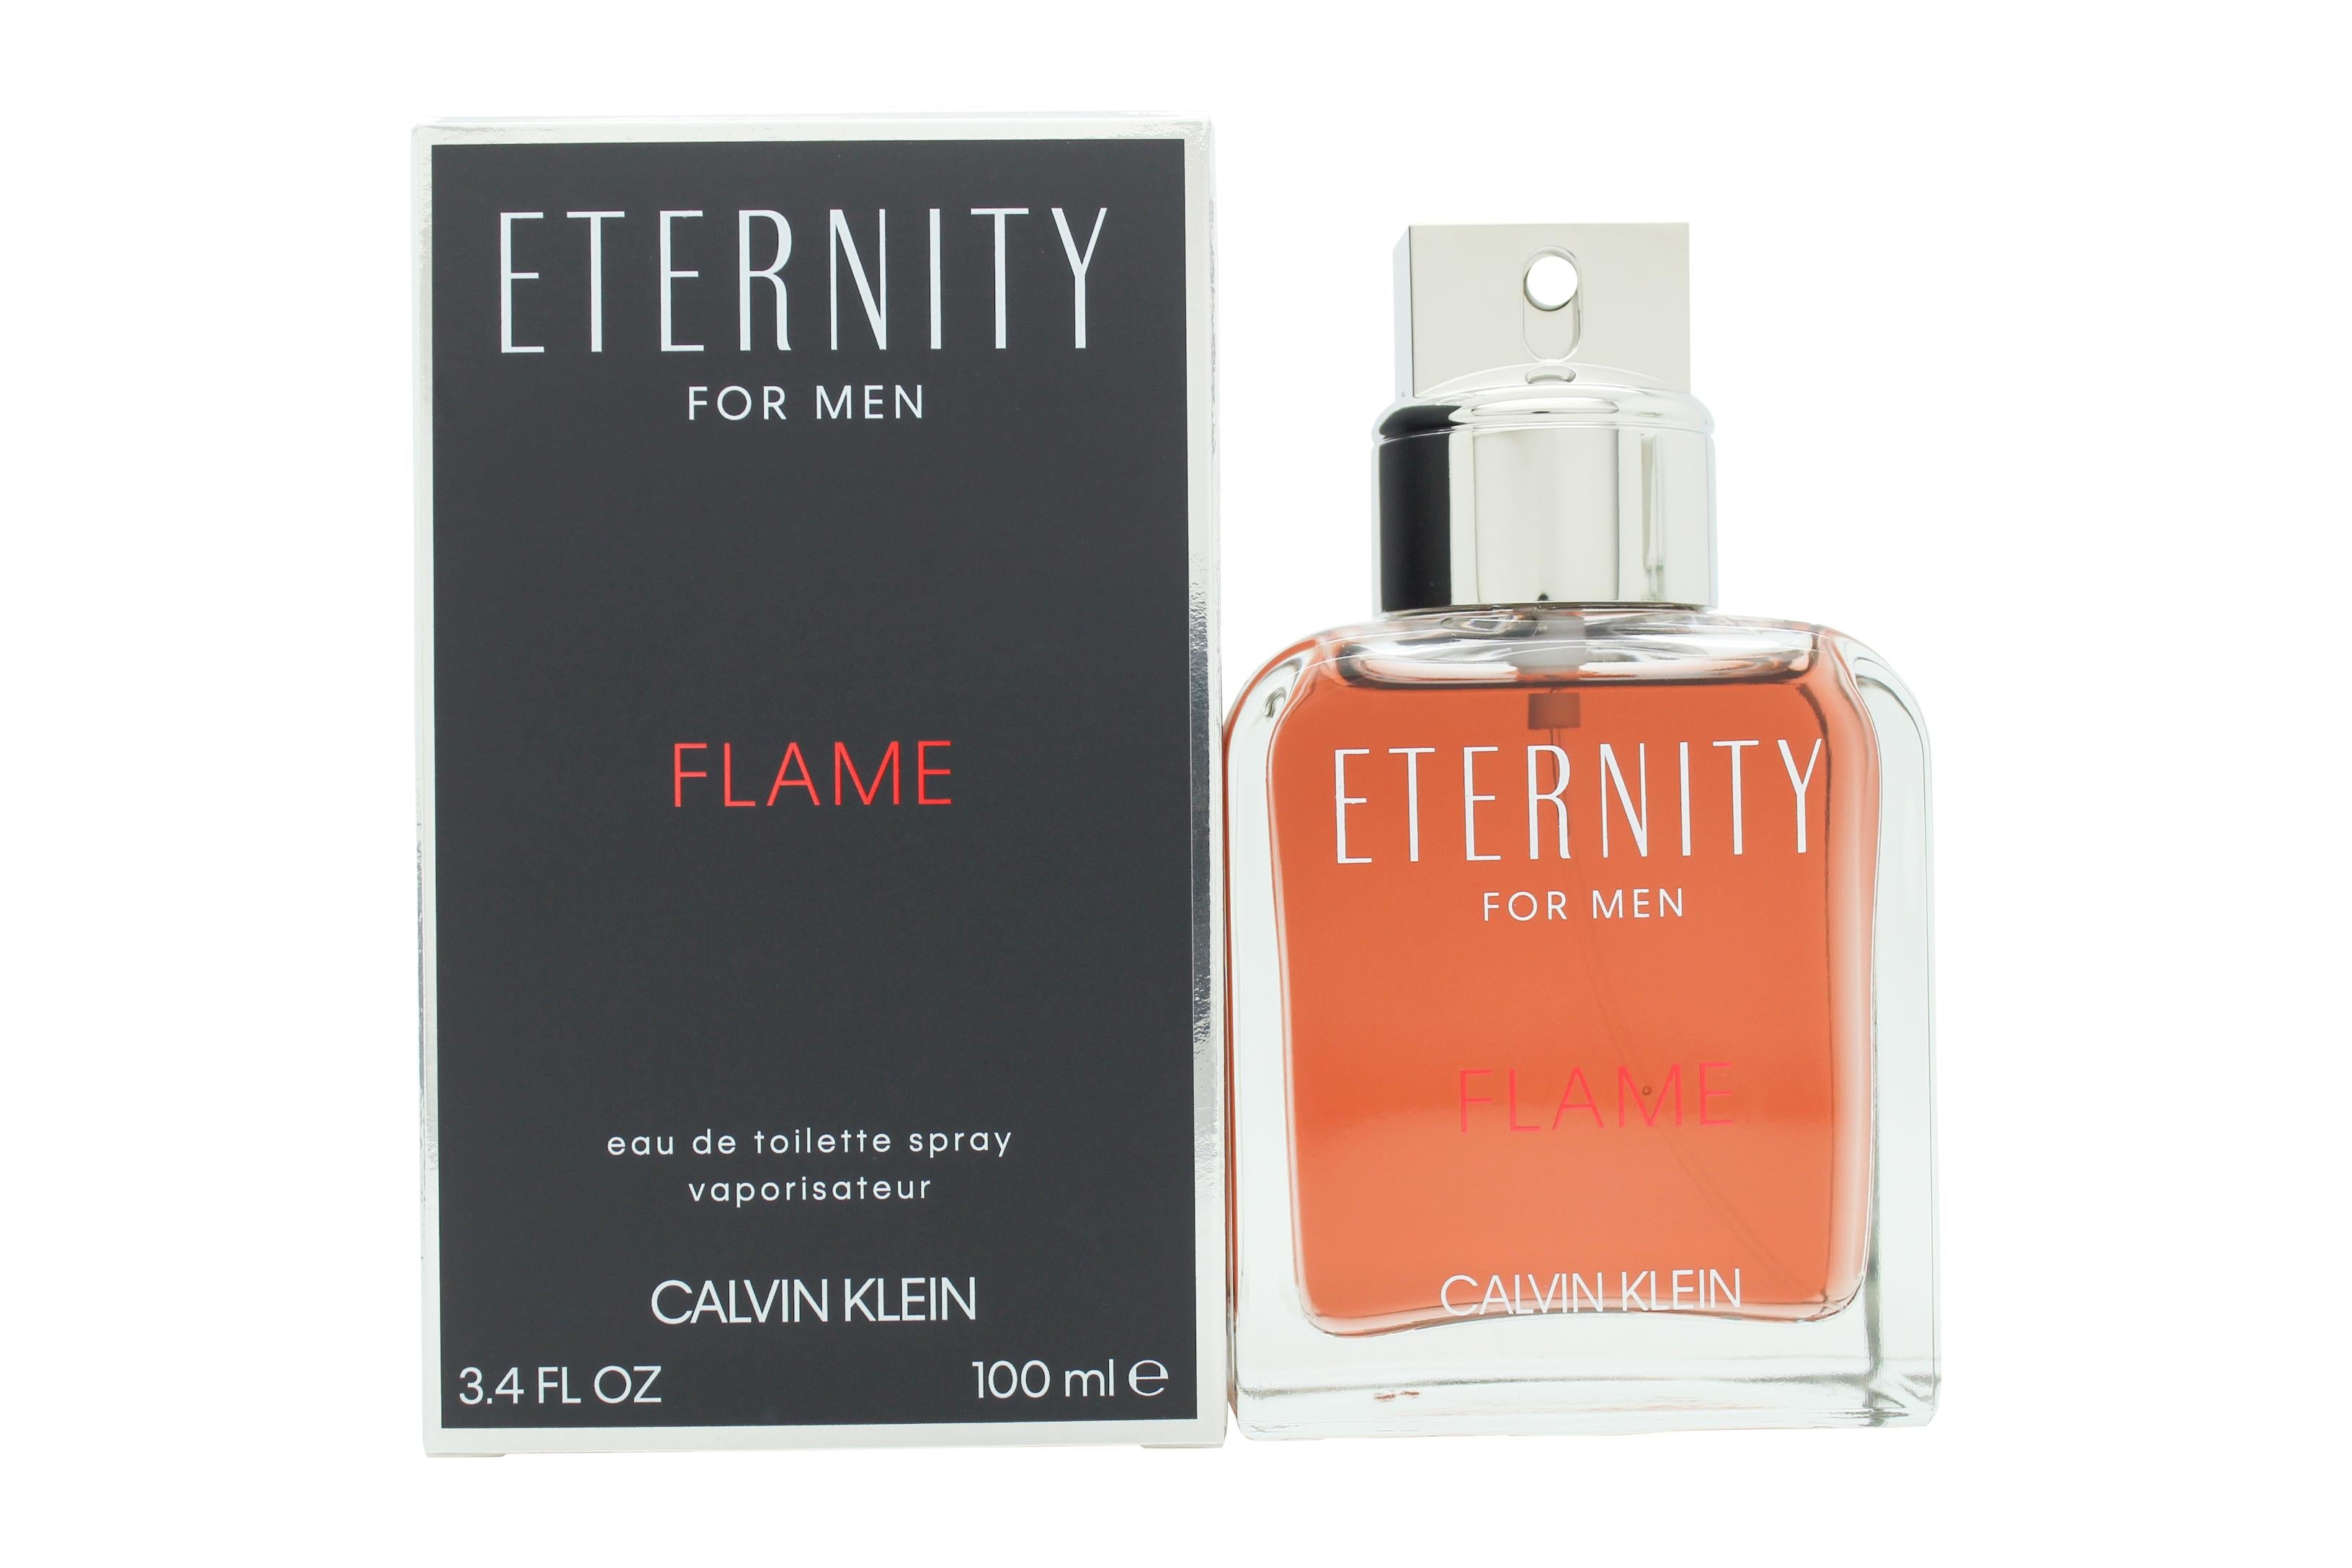 View Calvin Klein Eternity Flame Eau de Toilette 100ml Spray information